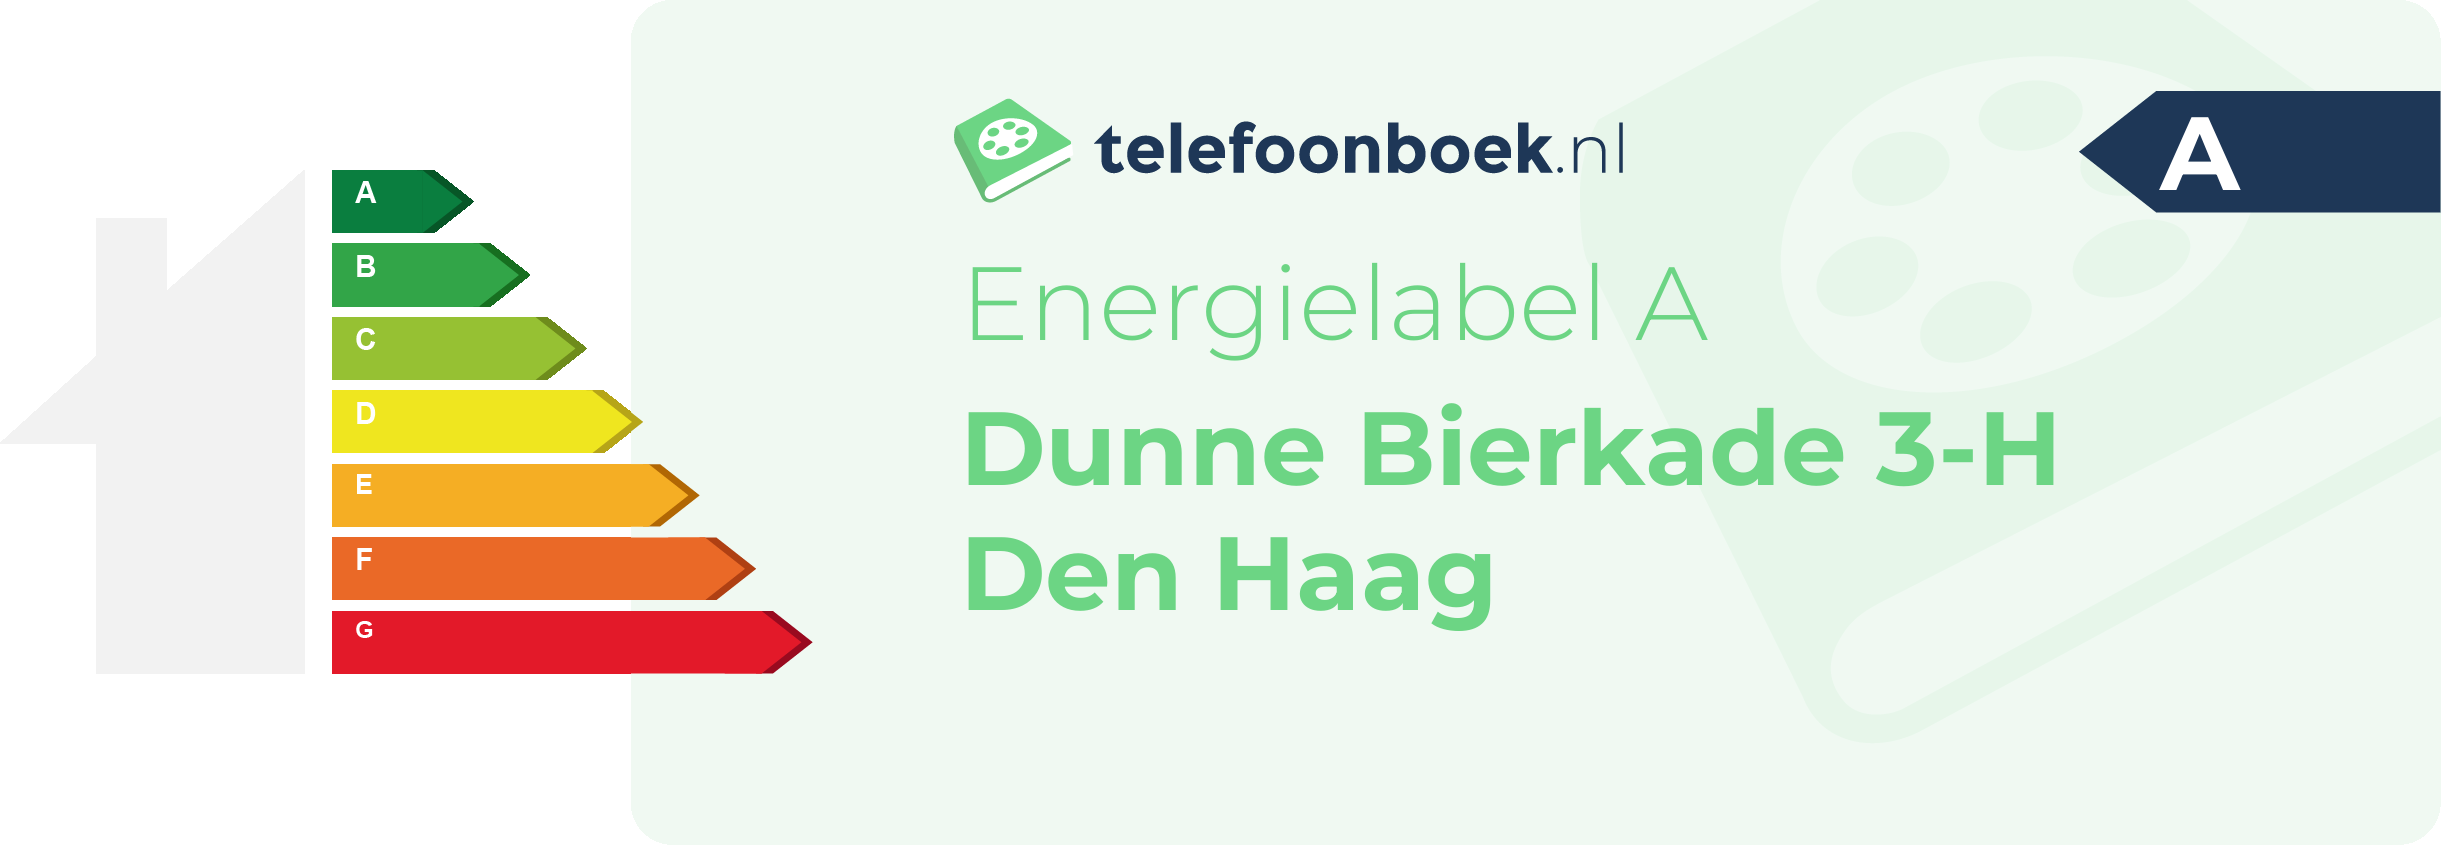 Energielabel Dunne Bierkade 3-H Den Haag